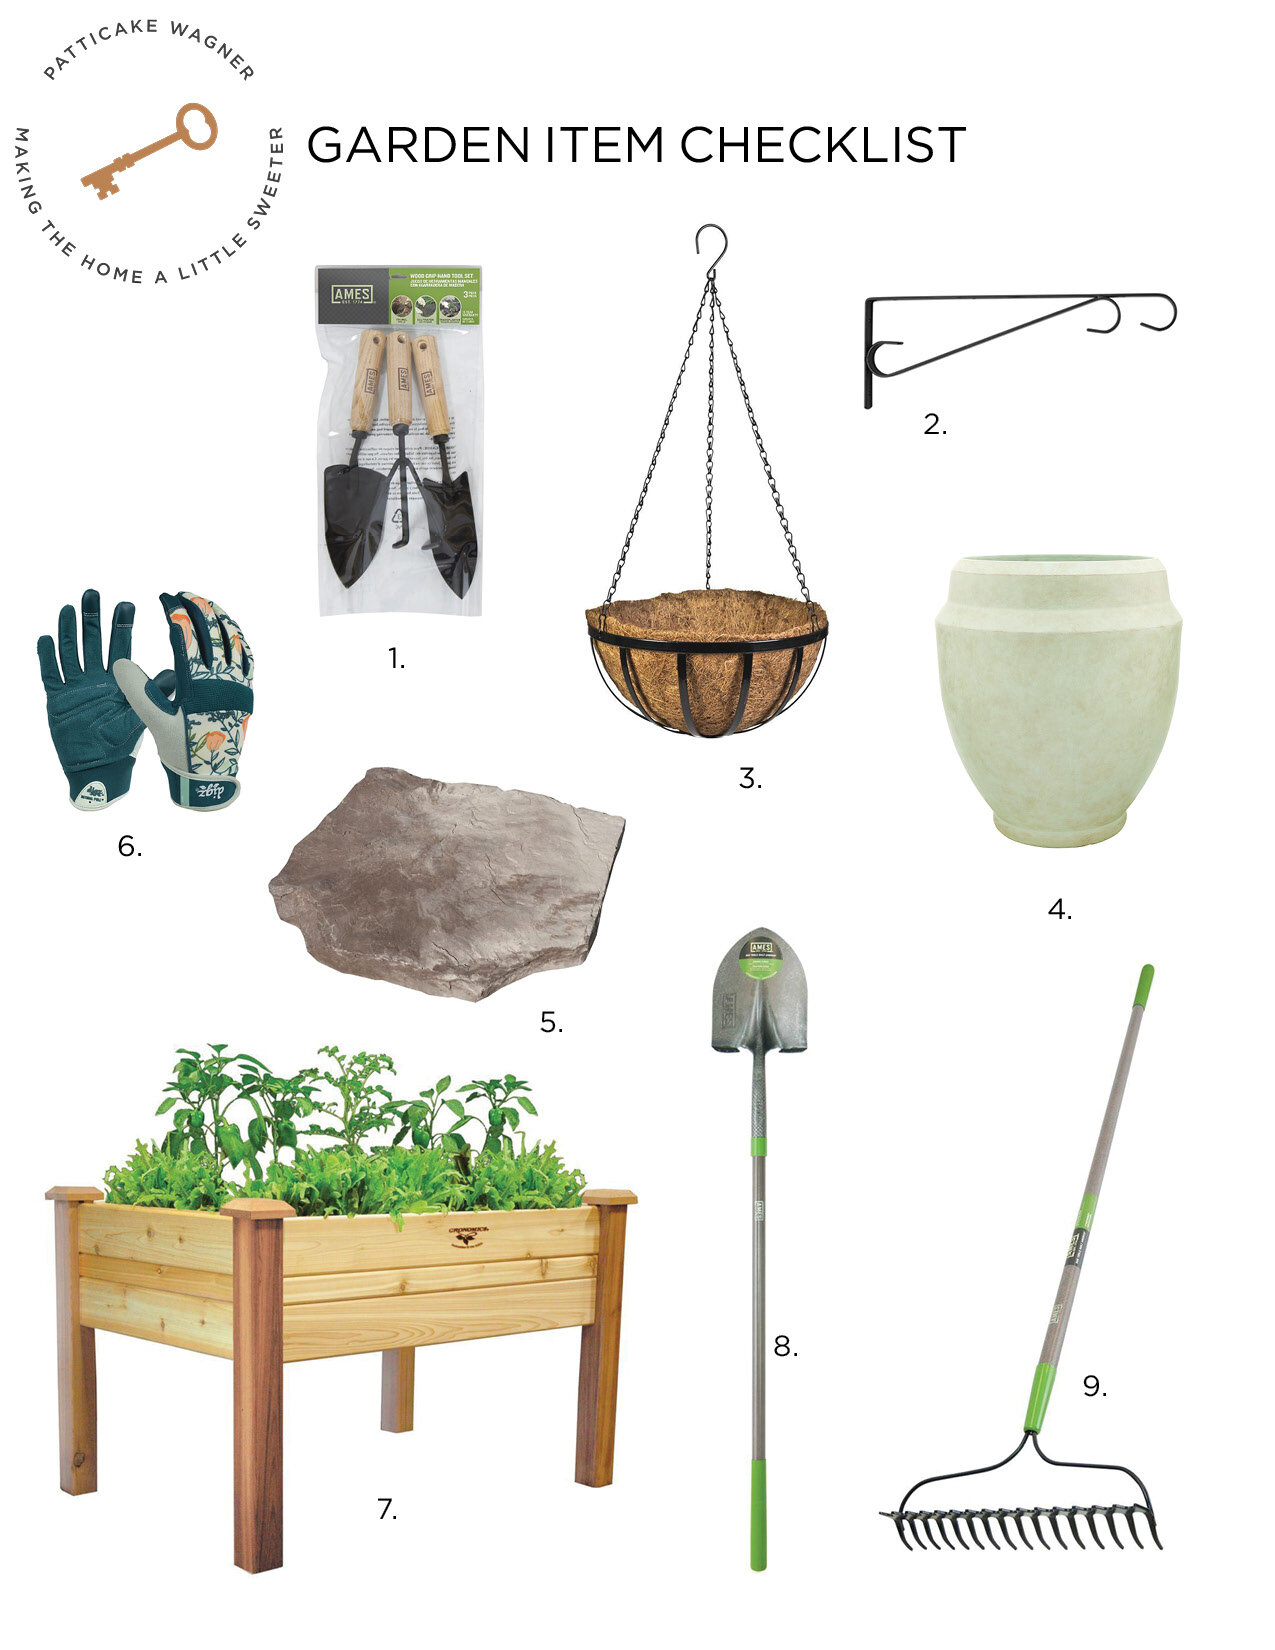 1. Hand Tool Set | 2. Plant Brackets | 3. Hanging Baskets | 4. Monroe Planter | 5. Stepping Stones | 6. Women’s Gardener Touchscreen Gloves | 7. Raised Garden Bed | 8. Digging Shovel | 9. Bow Rake